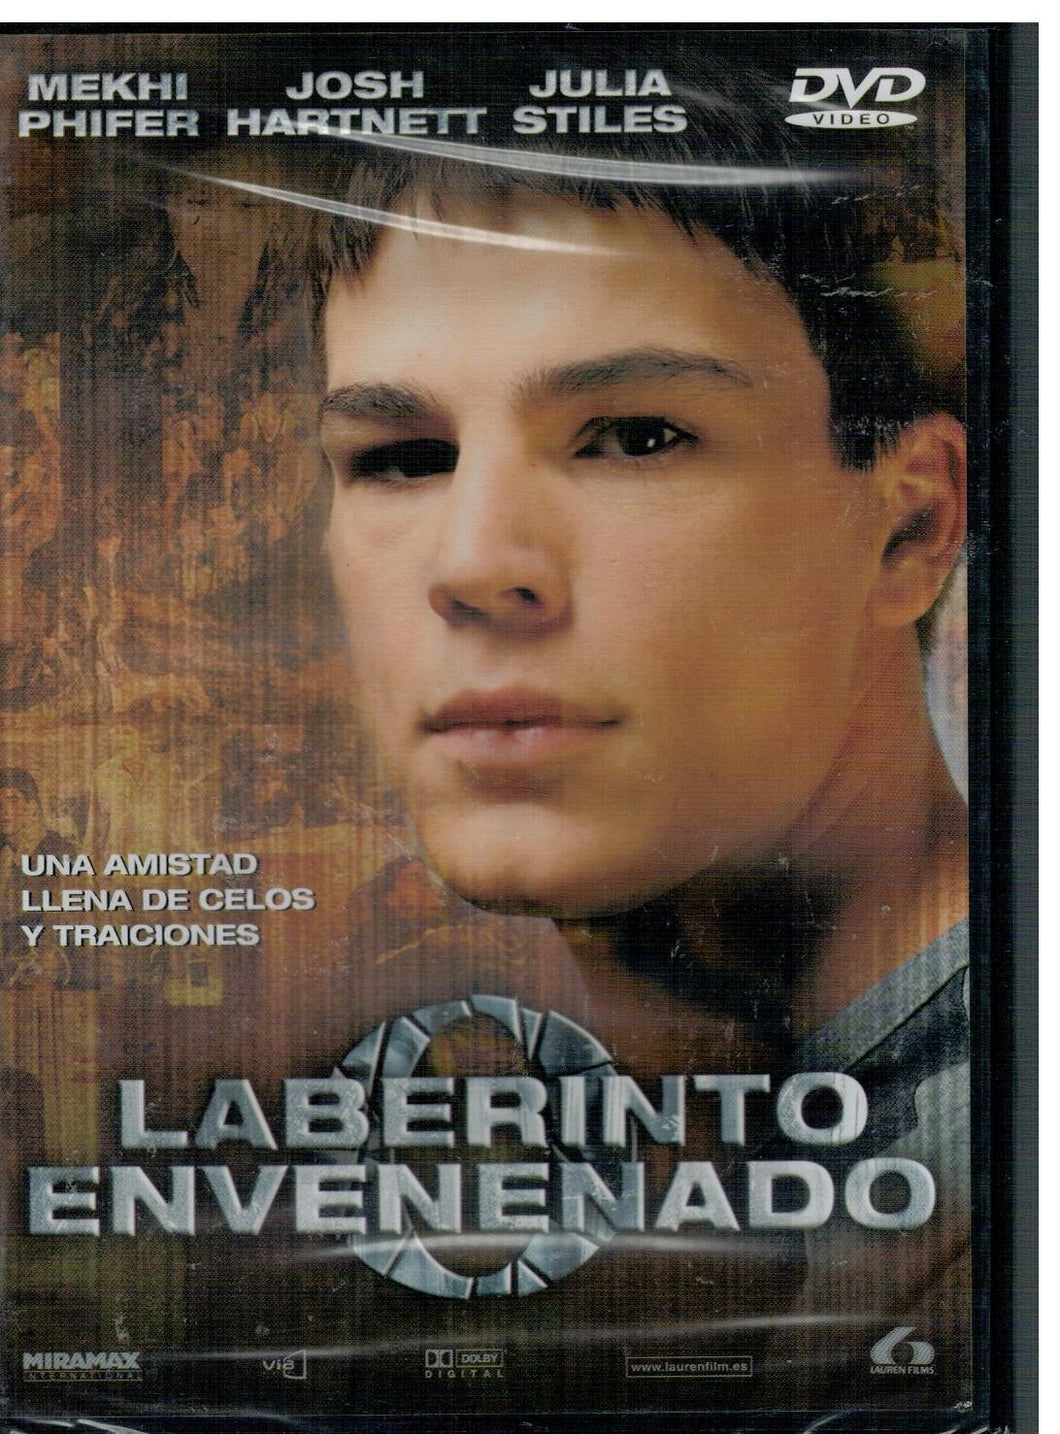 Laberinto envenenado (O) (DVD Nuevo)